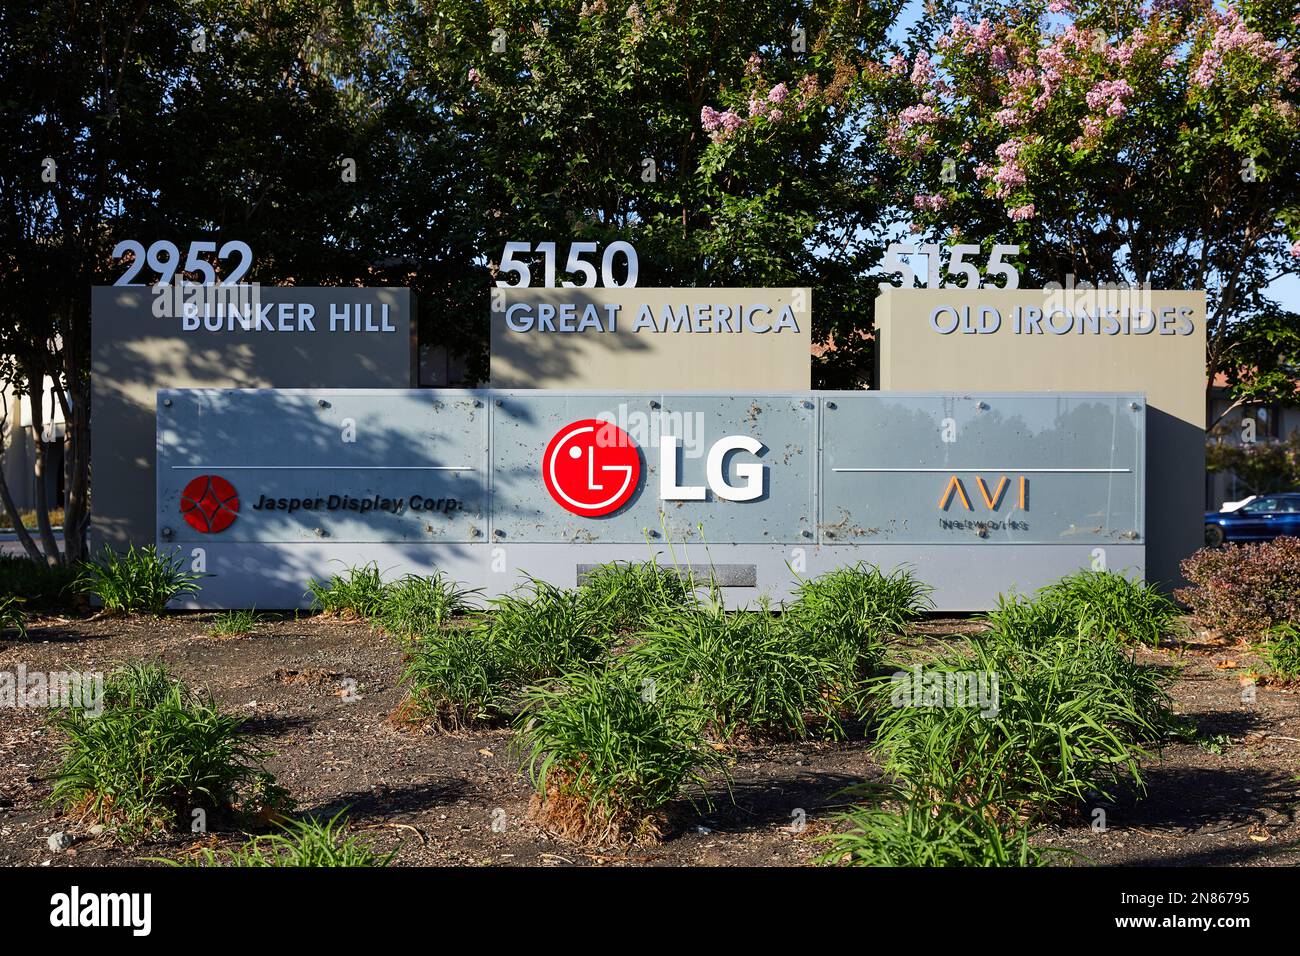 Jasper Display Corp., LG Silicon Valley Lab, AVI Networks, Signs; Great America Pkwy, Santa Clara, Kalifornien Stockfoto